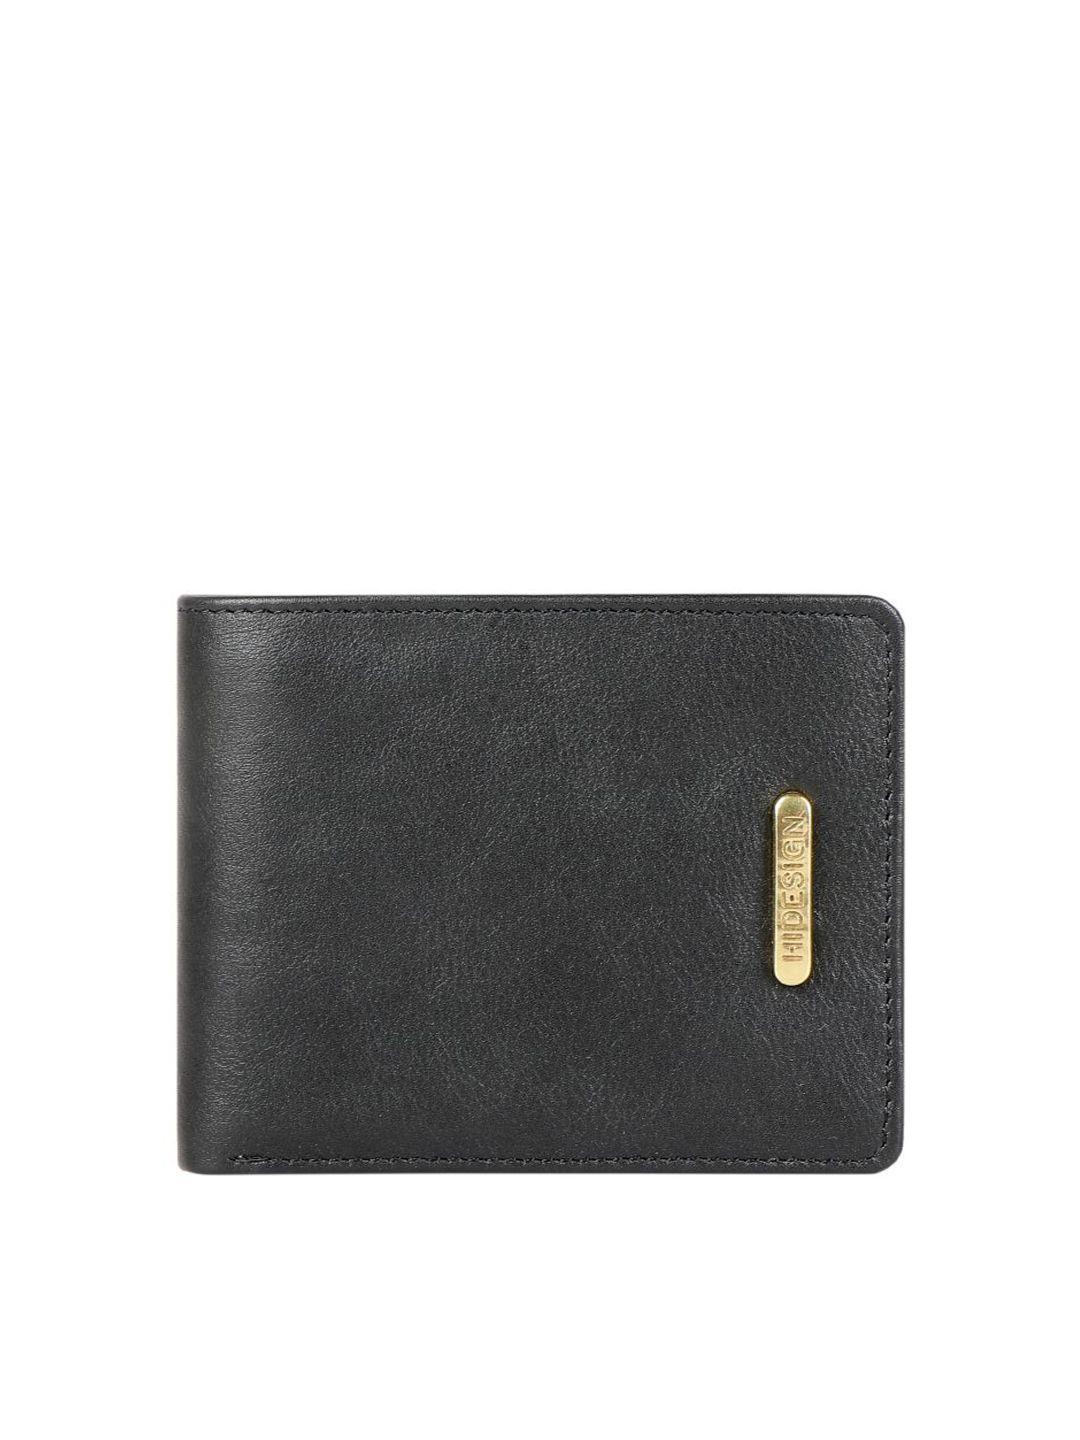 hidesign men black leather two fold wallet